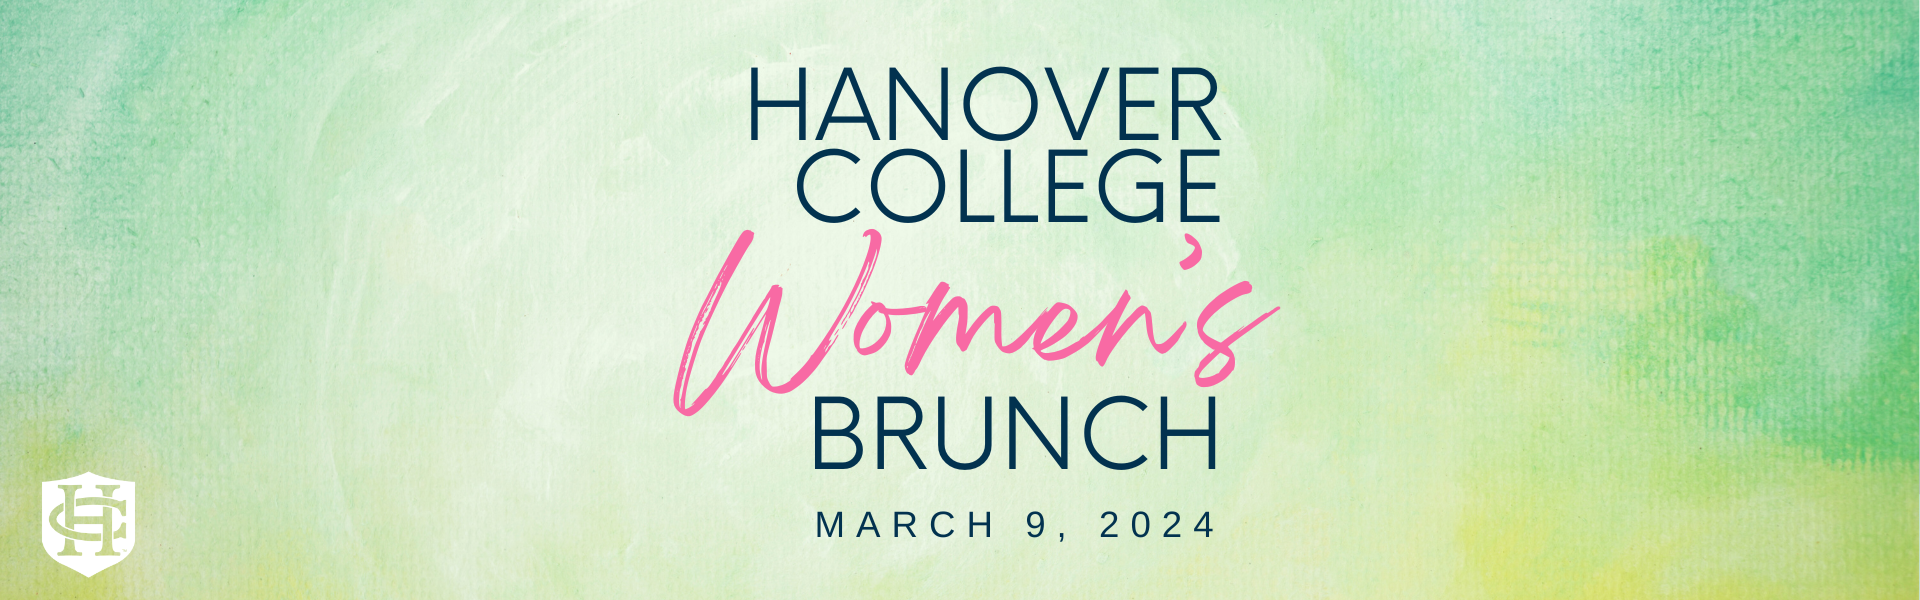 Hanover College Women's Brunch heading